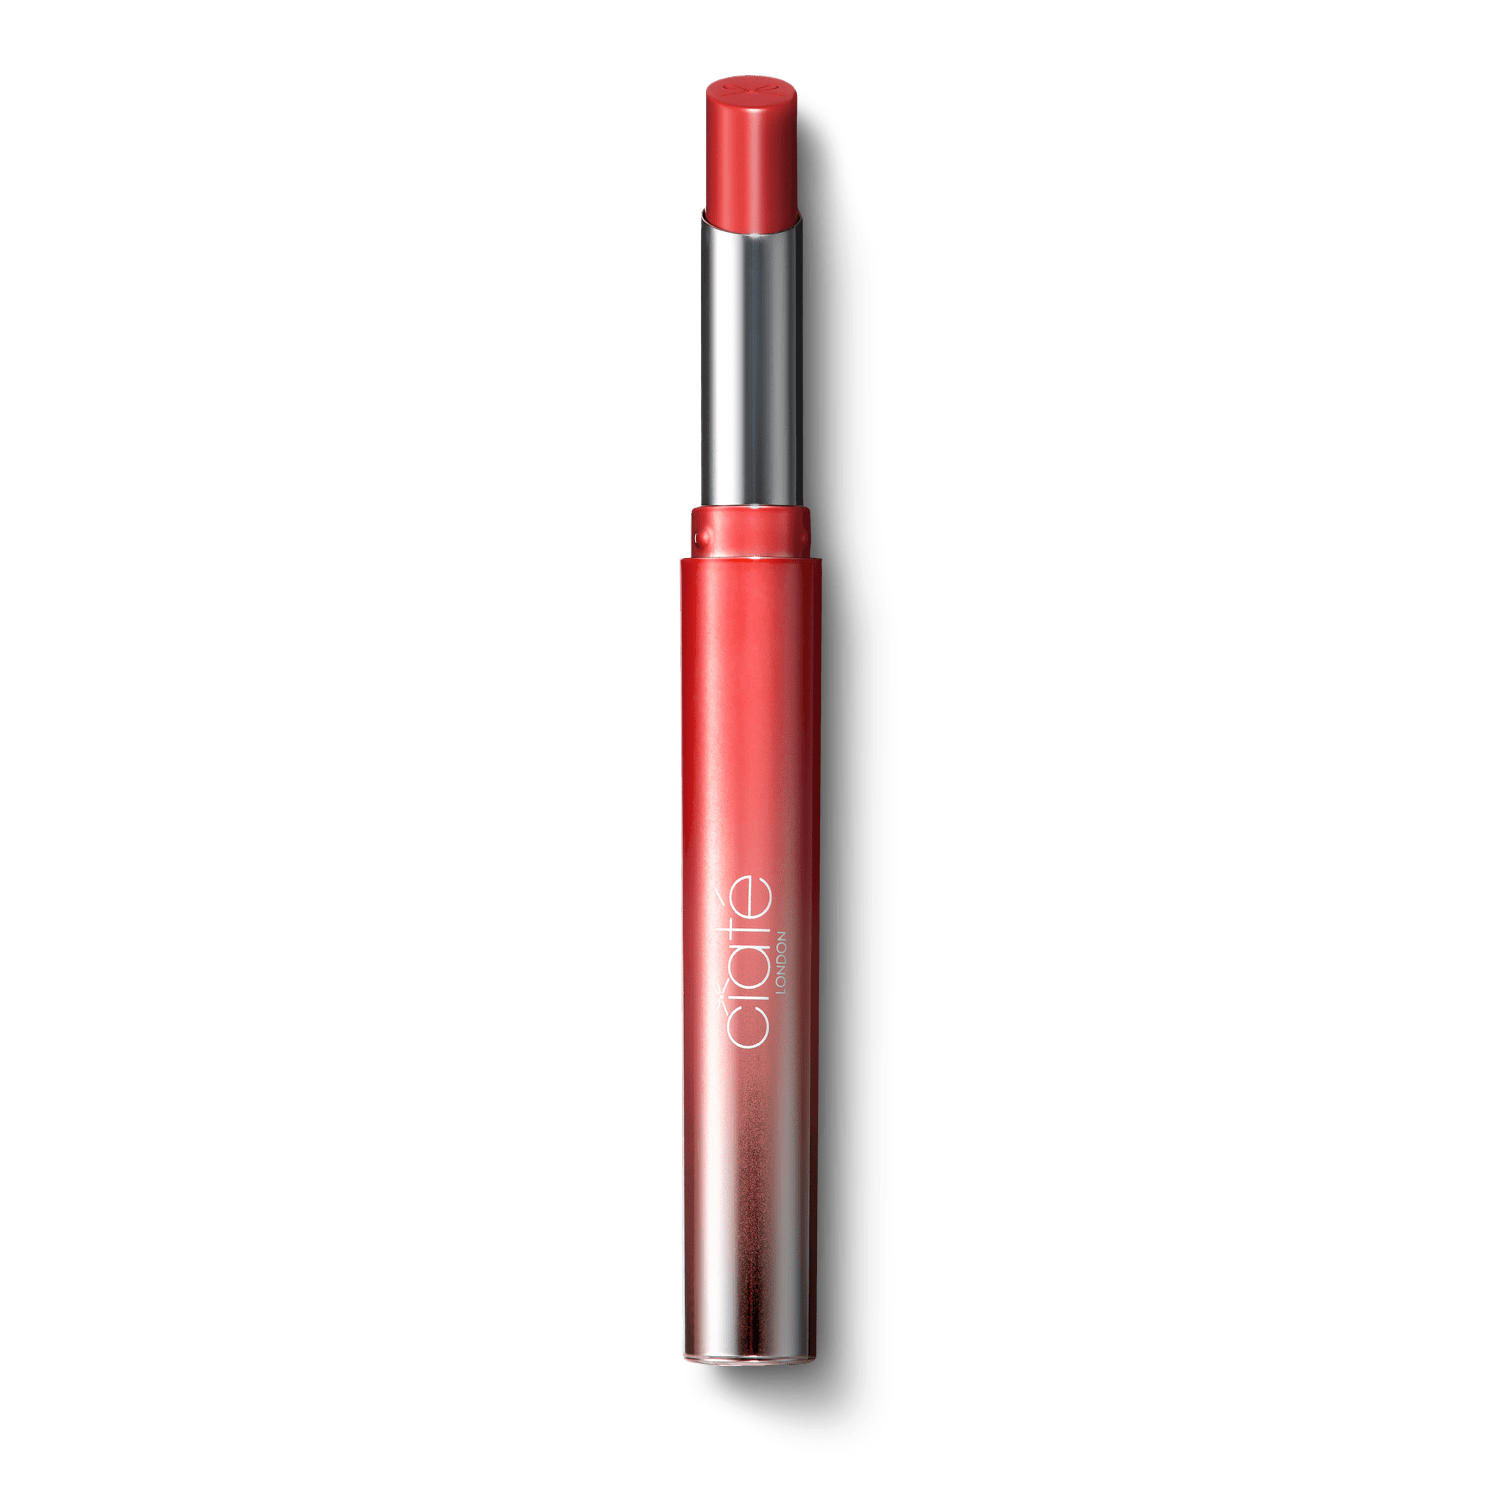 Wonderwand Lipstick Rocket - Vibrant Coral Red Colour Cosmetics Ciaté London